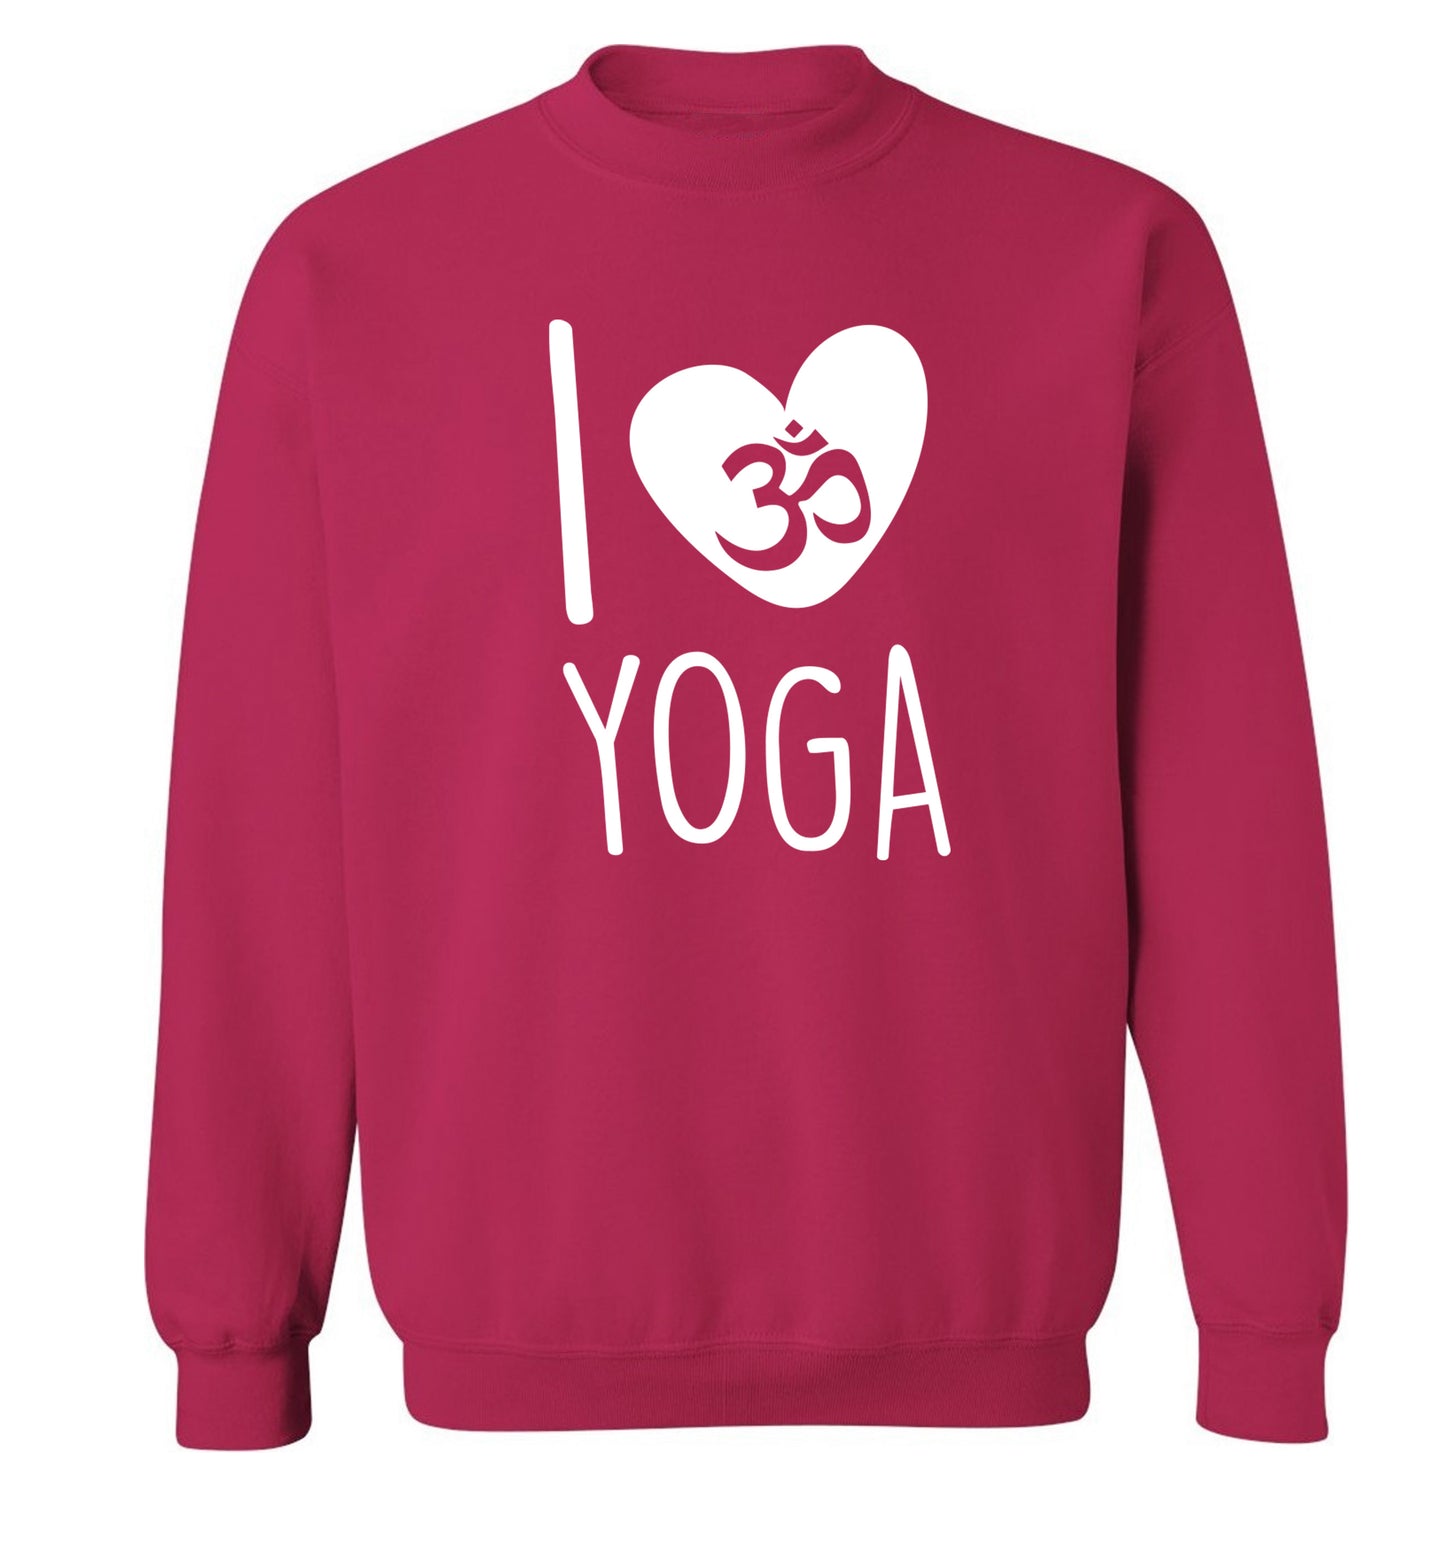 I love yoga Adult's unisex pink Sweater 2XL